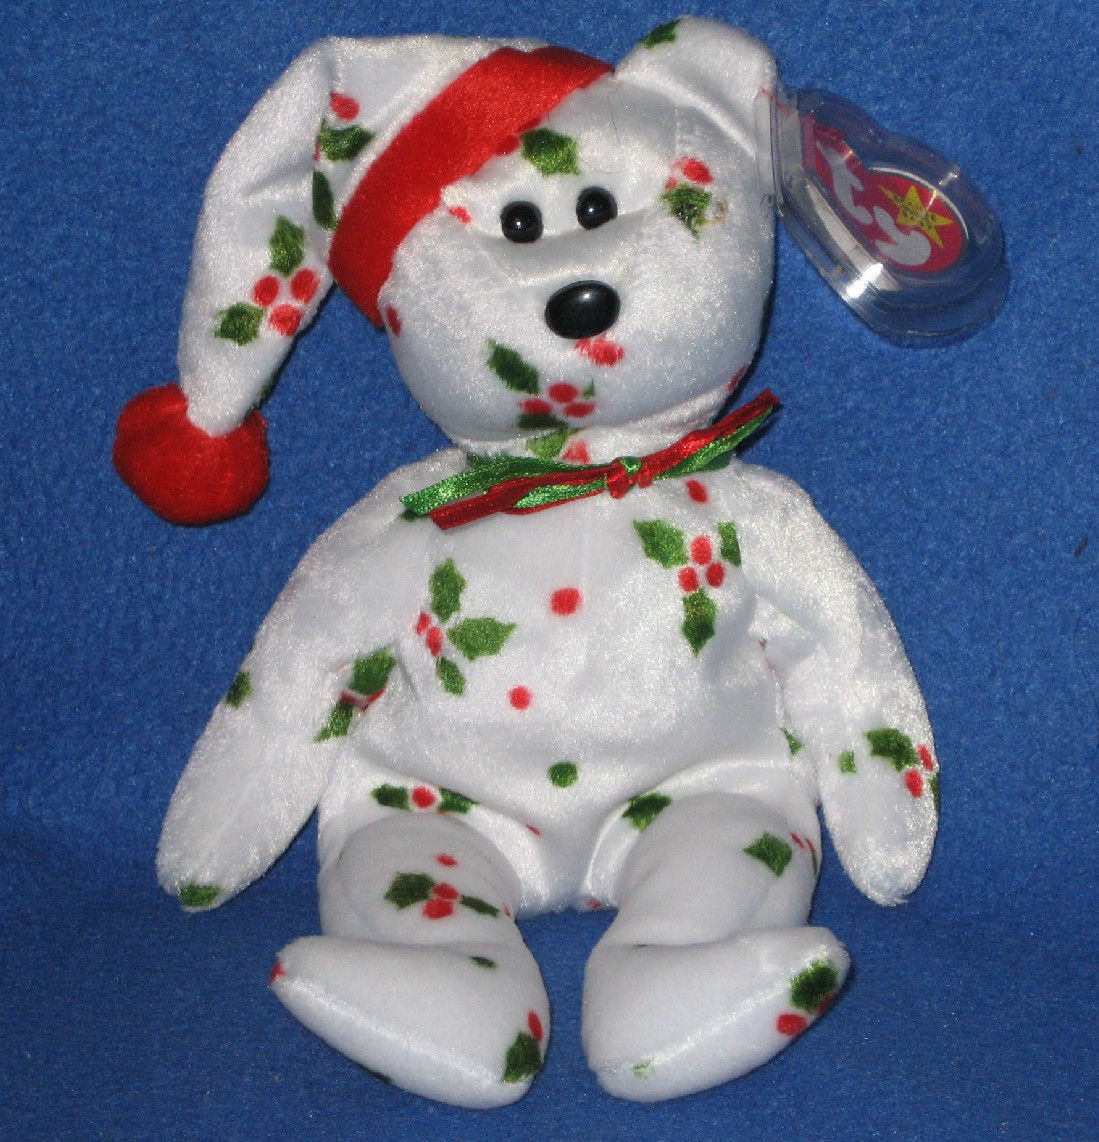 1998 holiday teddy beanie baby